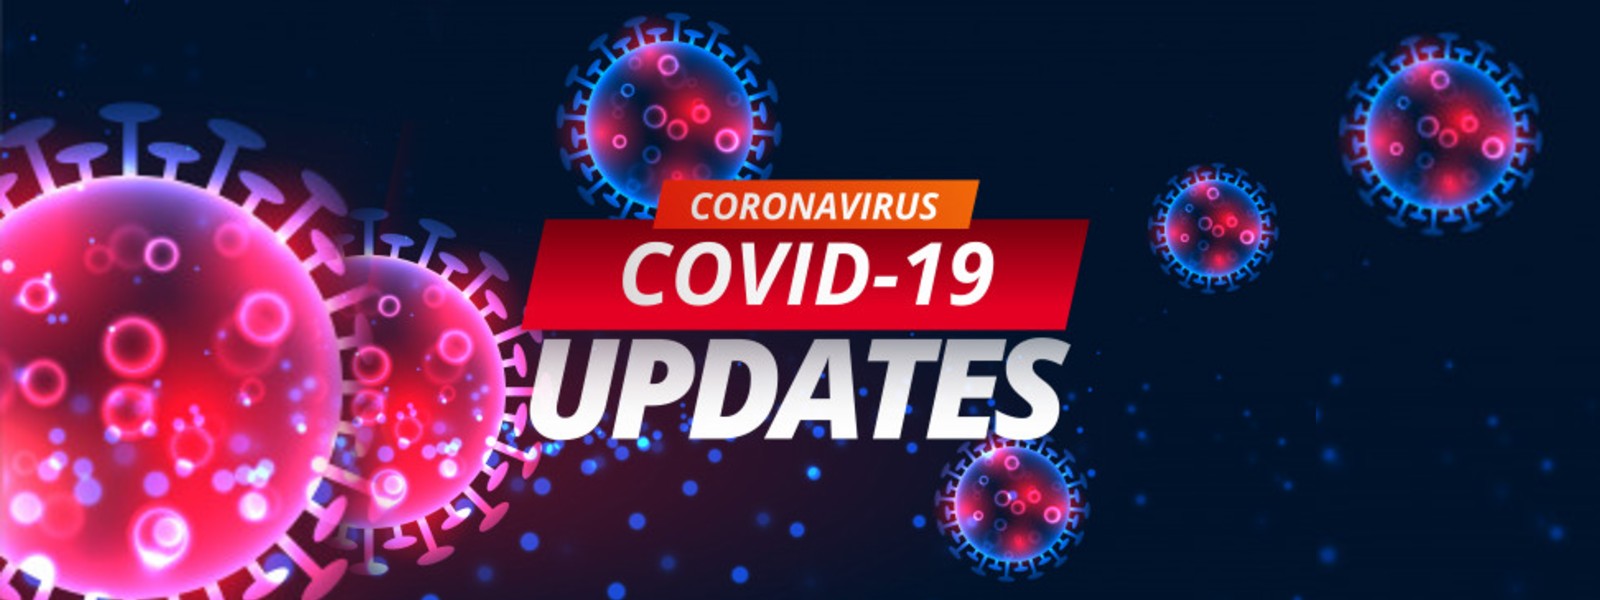 27,000+ COVID infections so far in June – NOCPCO